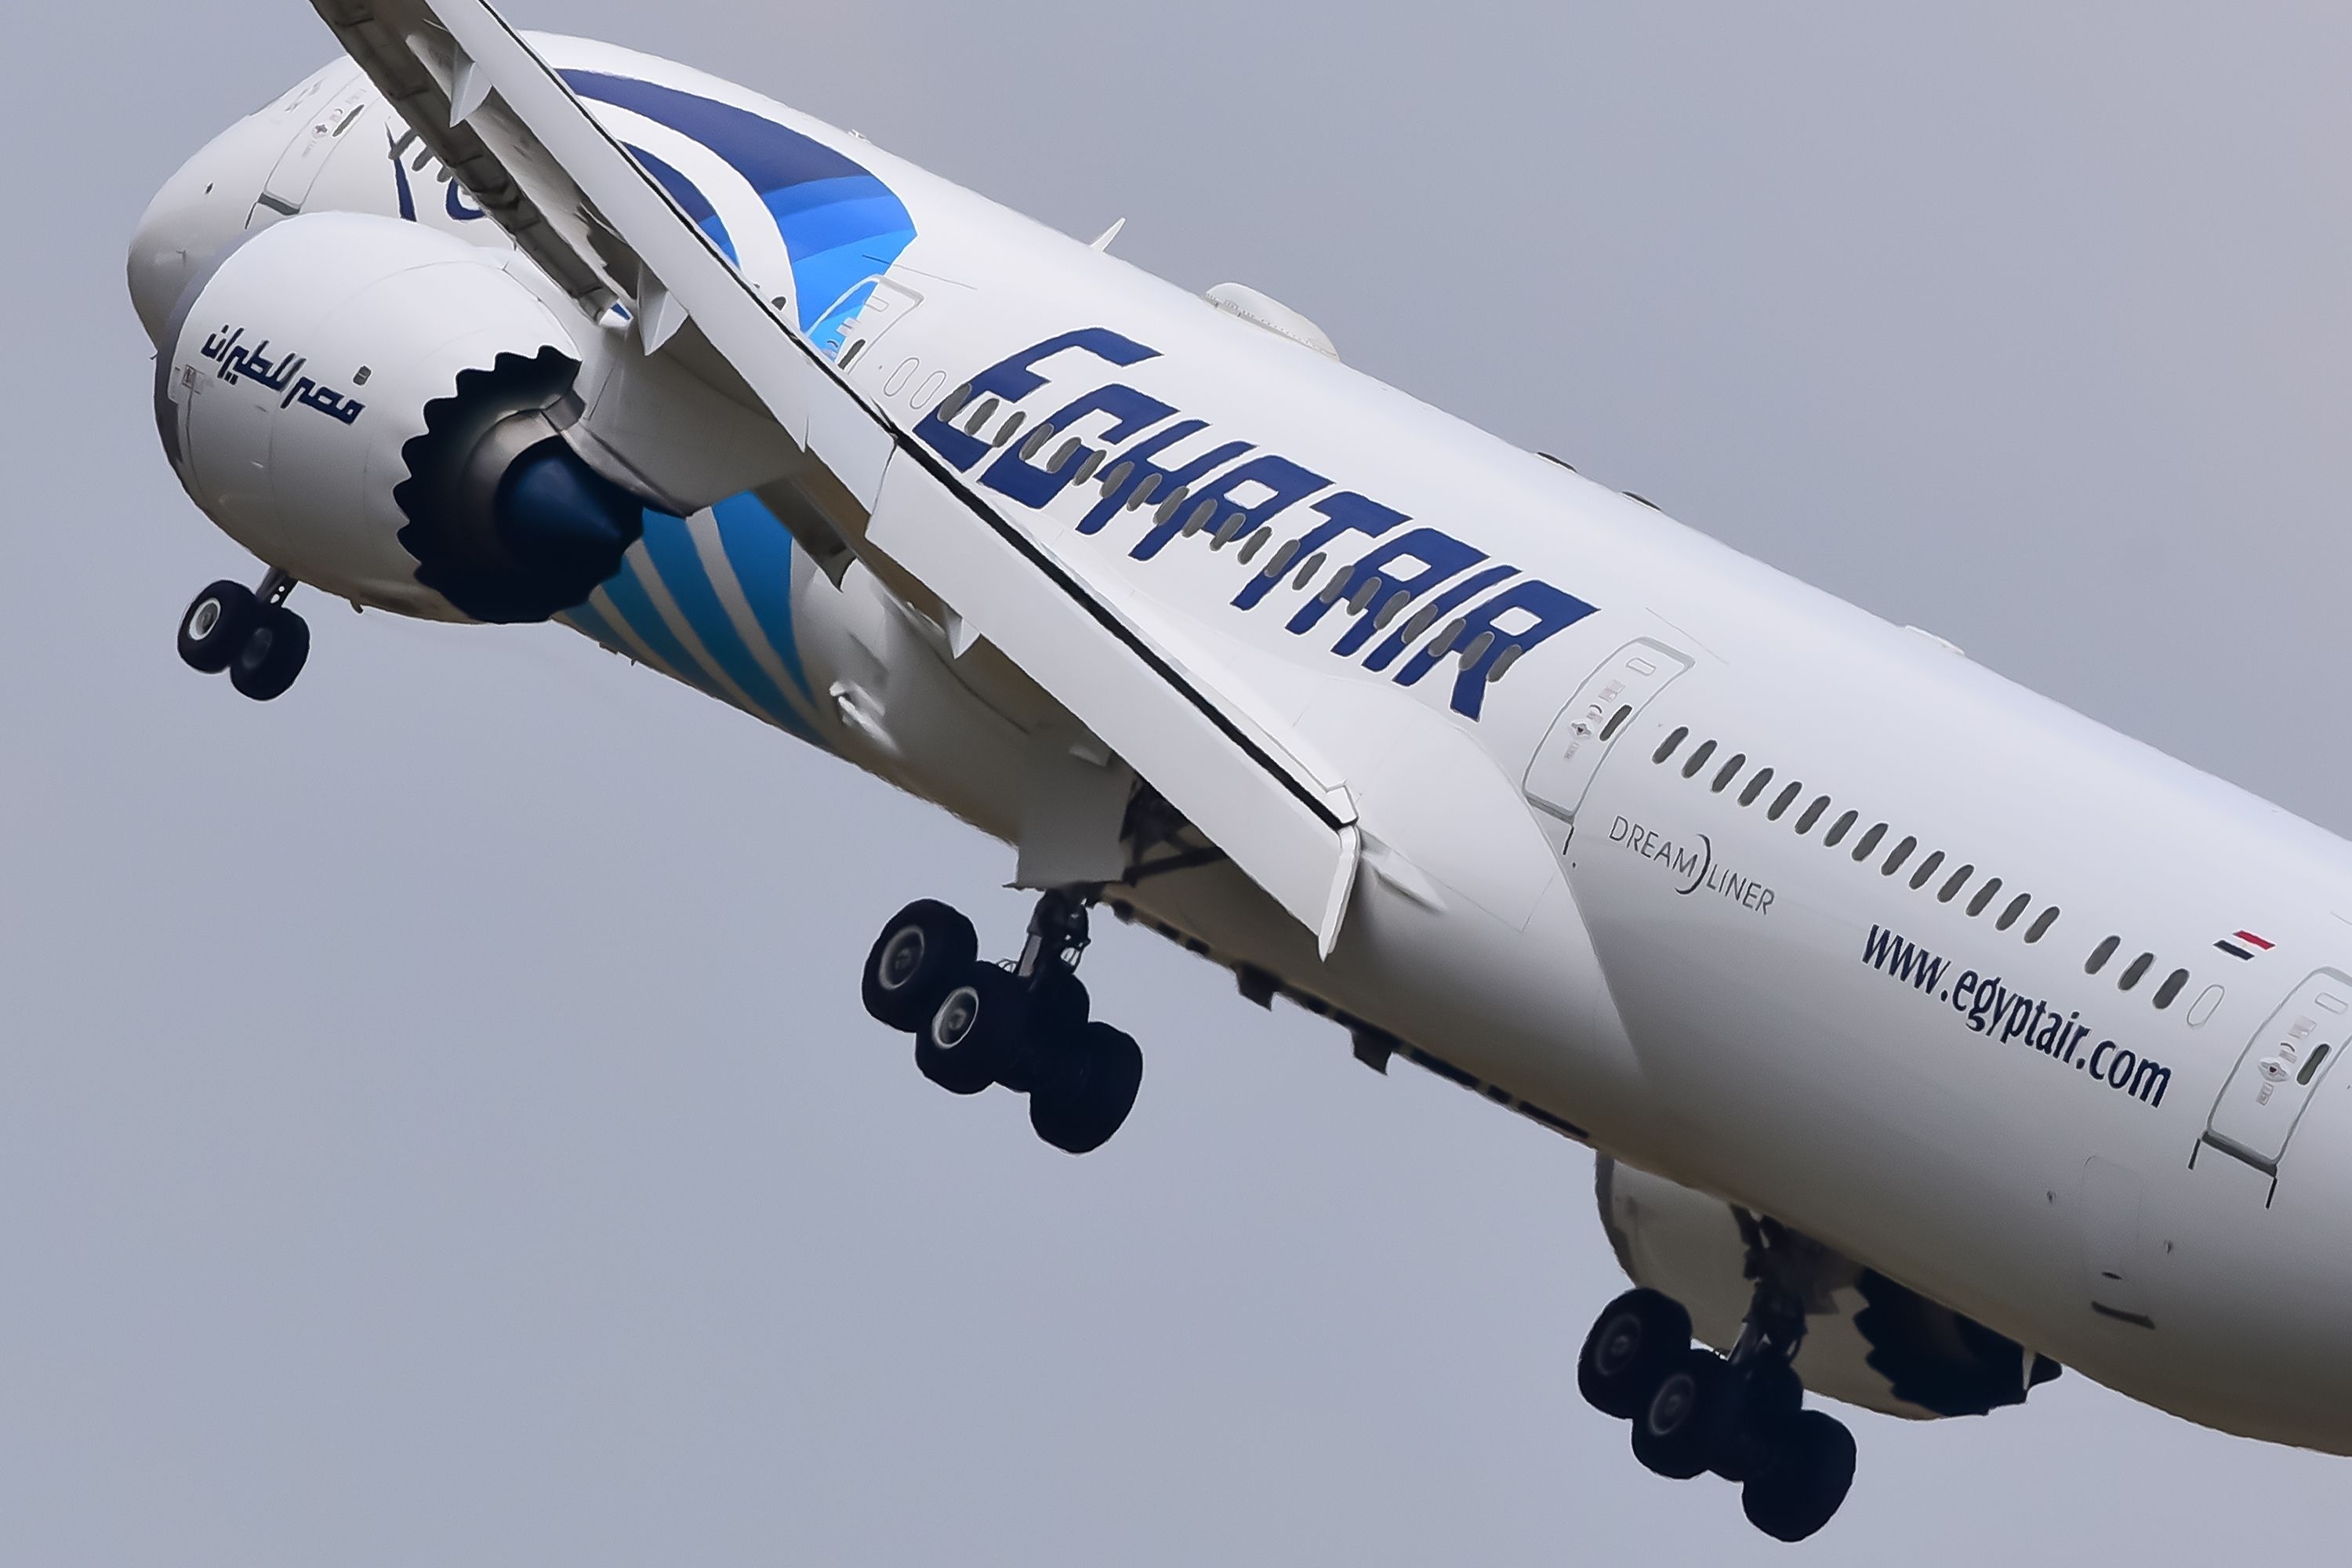 An Egyptair Boeing 787-9 flying in the sky.